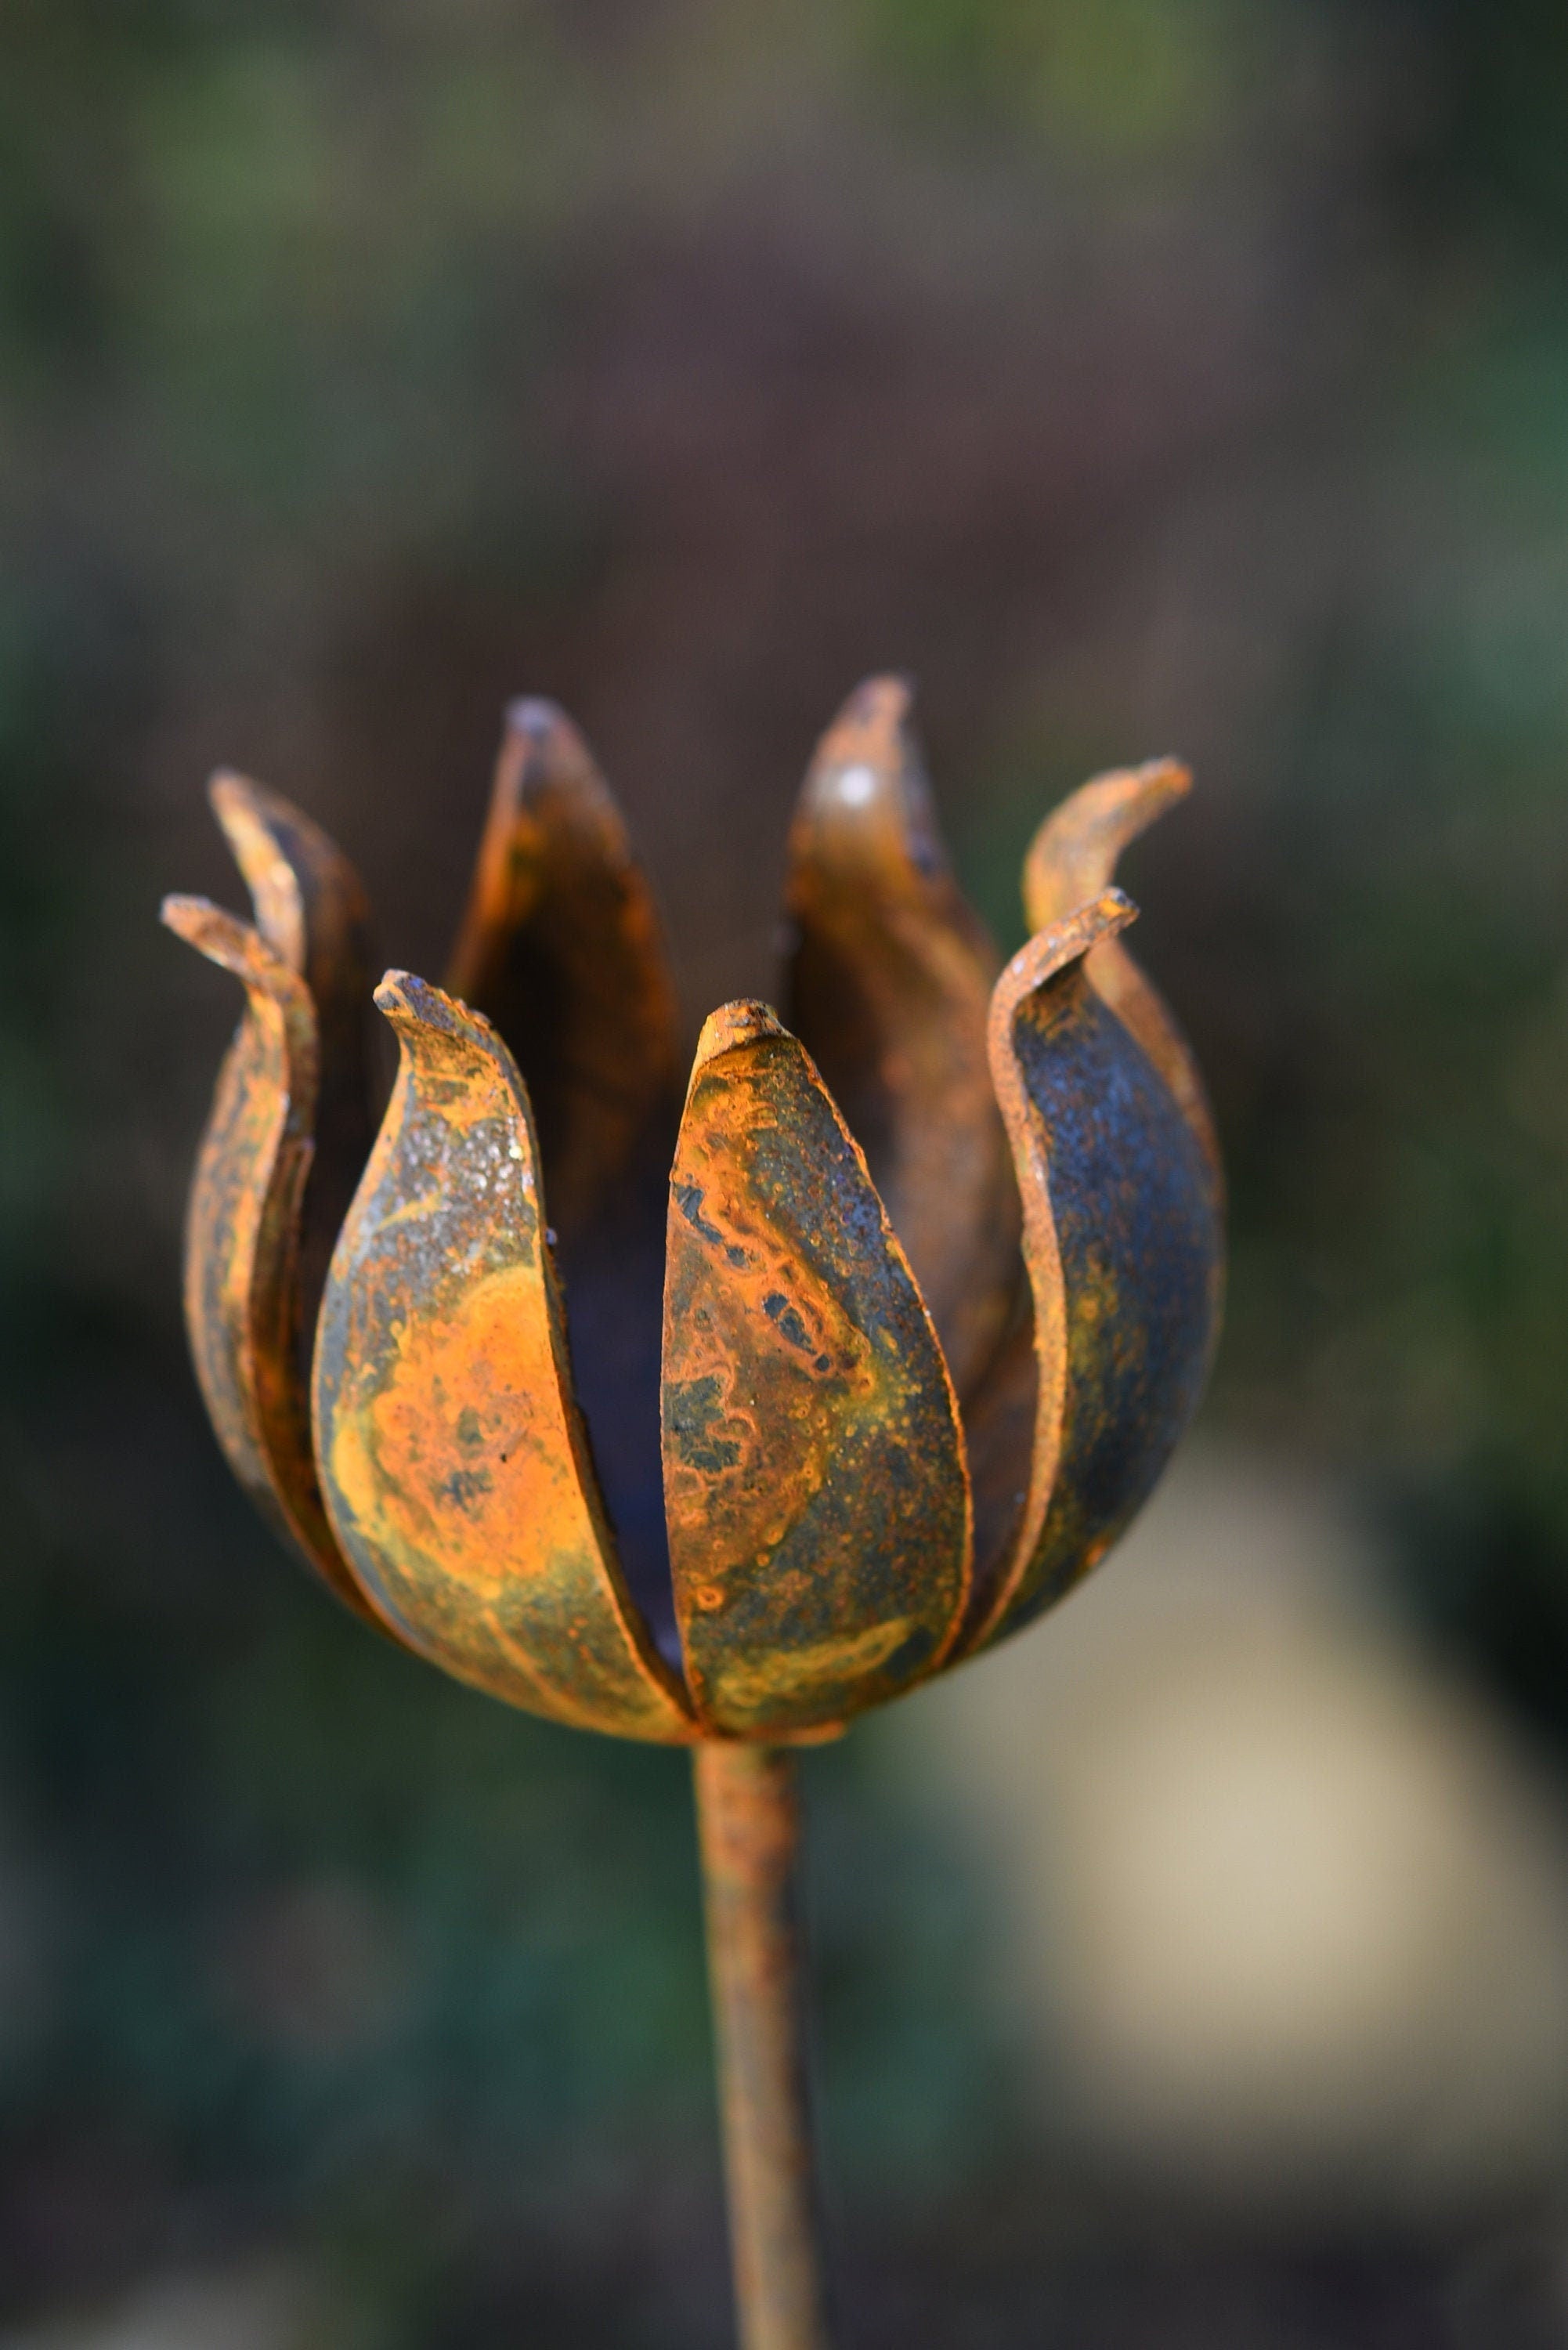 Rusty Metal Garden Flower Sculpture